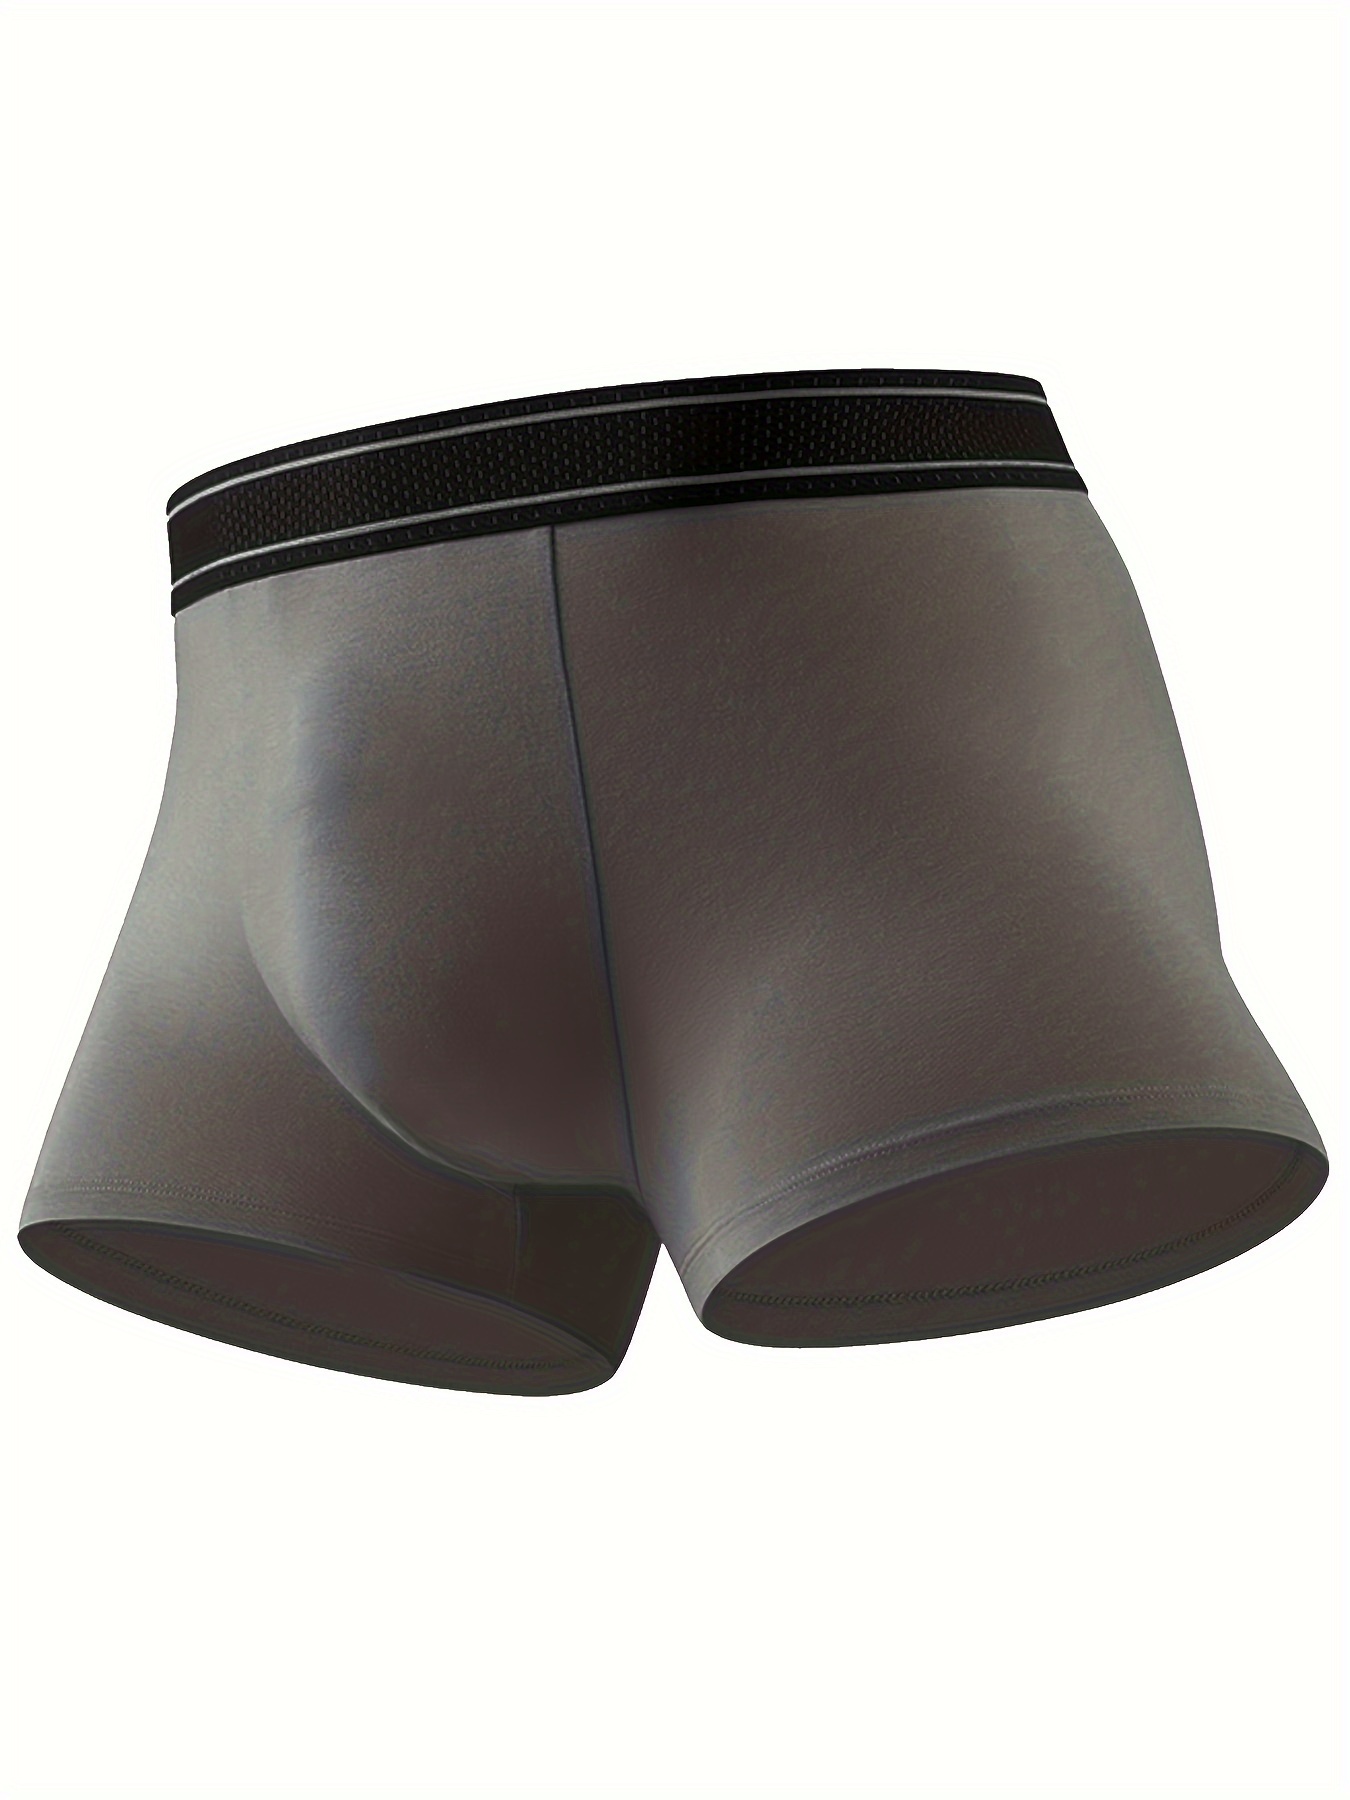 LAPASA Men's Boxer Briefs 4-Pack Cotton Stretch Underwear with Fly